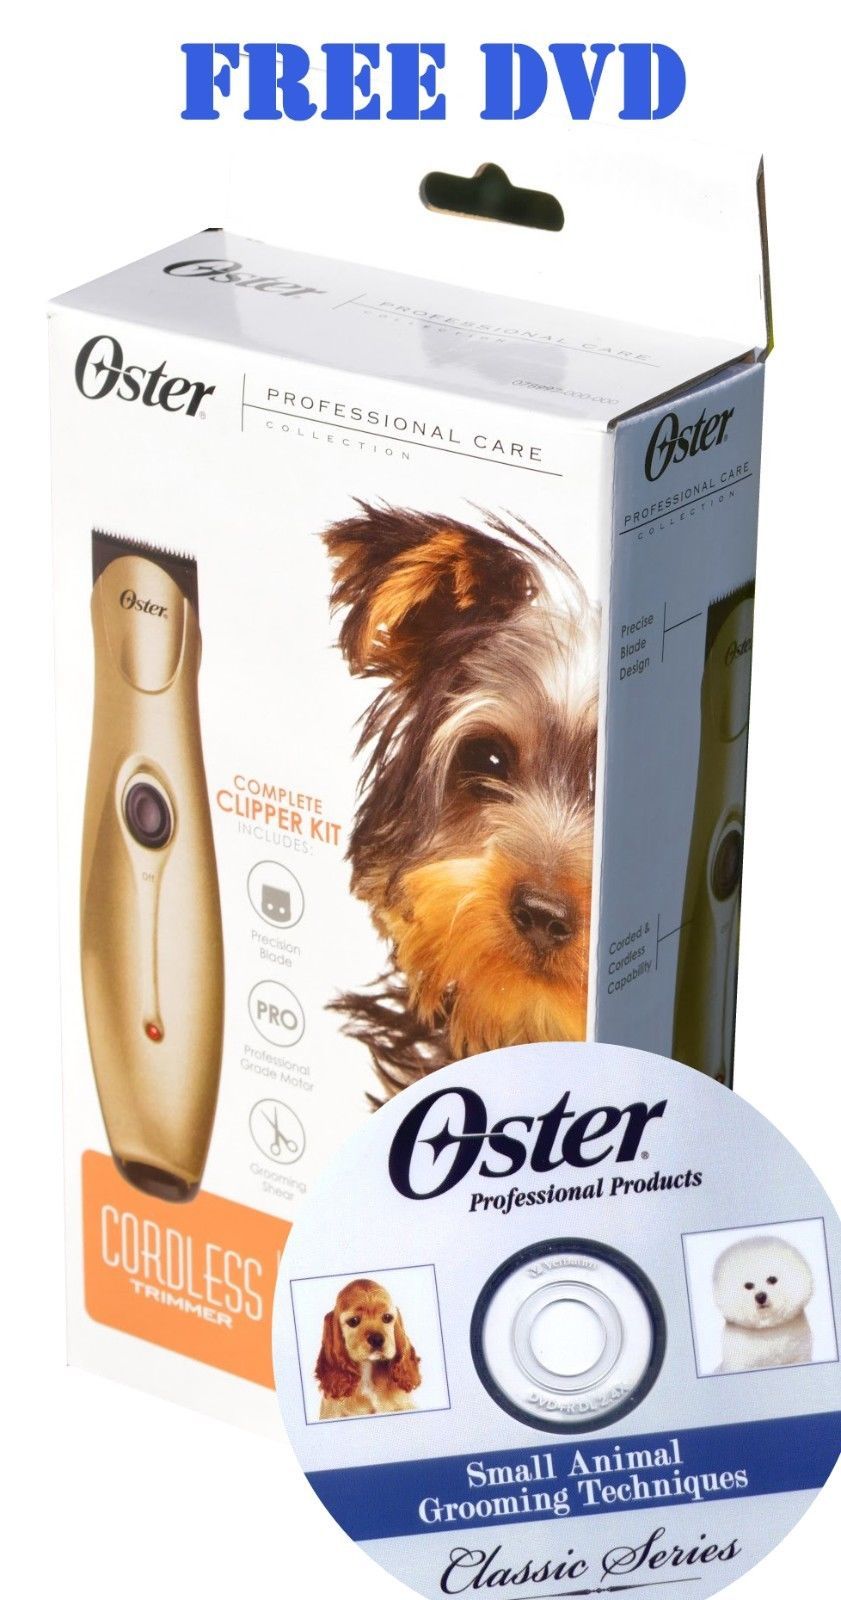 oster cordless pet hair trimmer